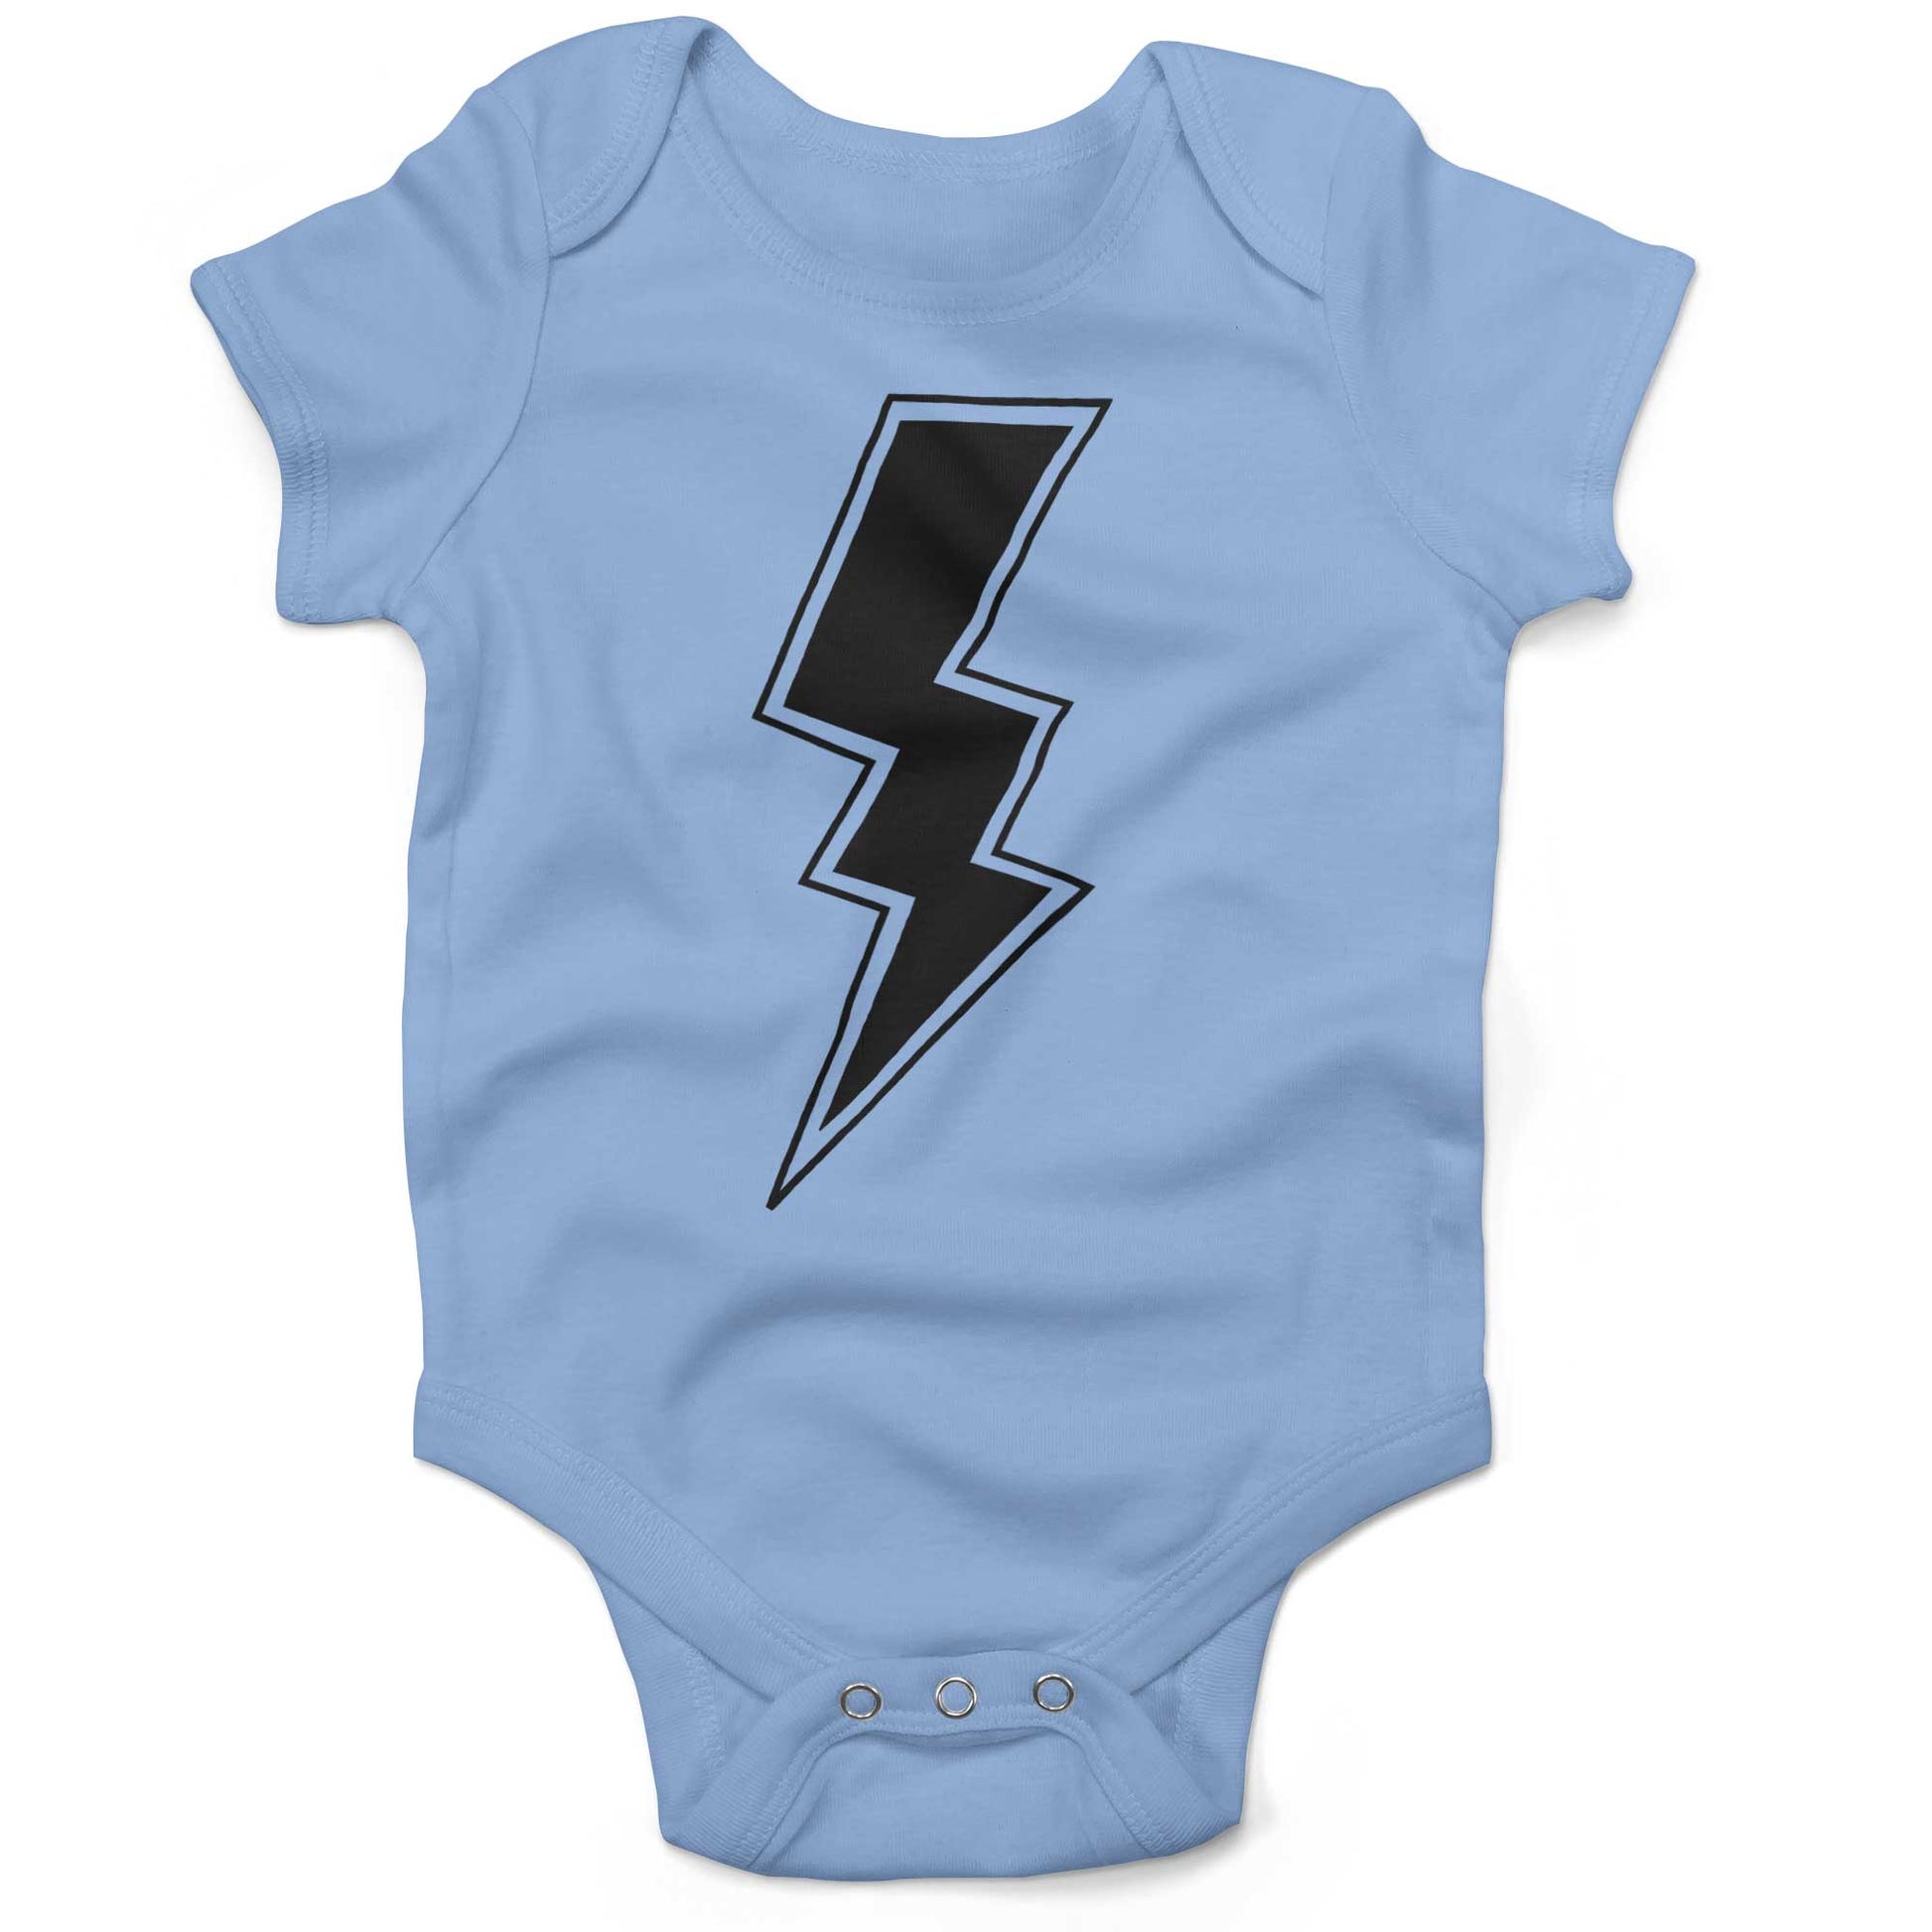 Giant Lightning Bolt Infant Bodysuit or Raglan Baby Tee-Organic Baby Blue-3-6 months